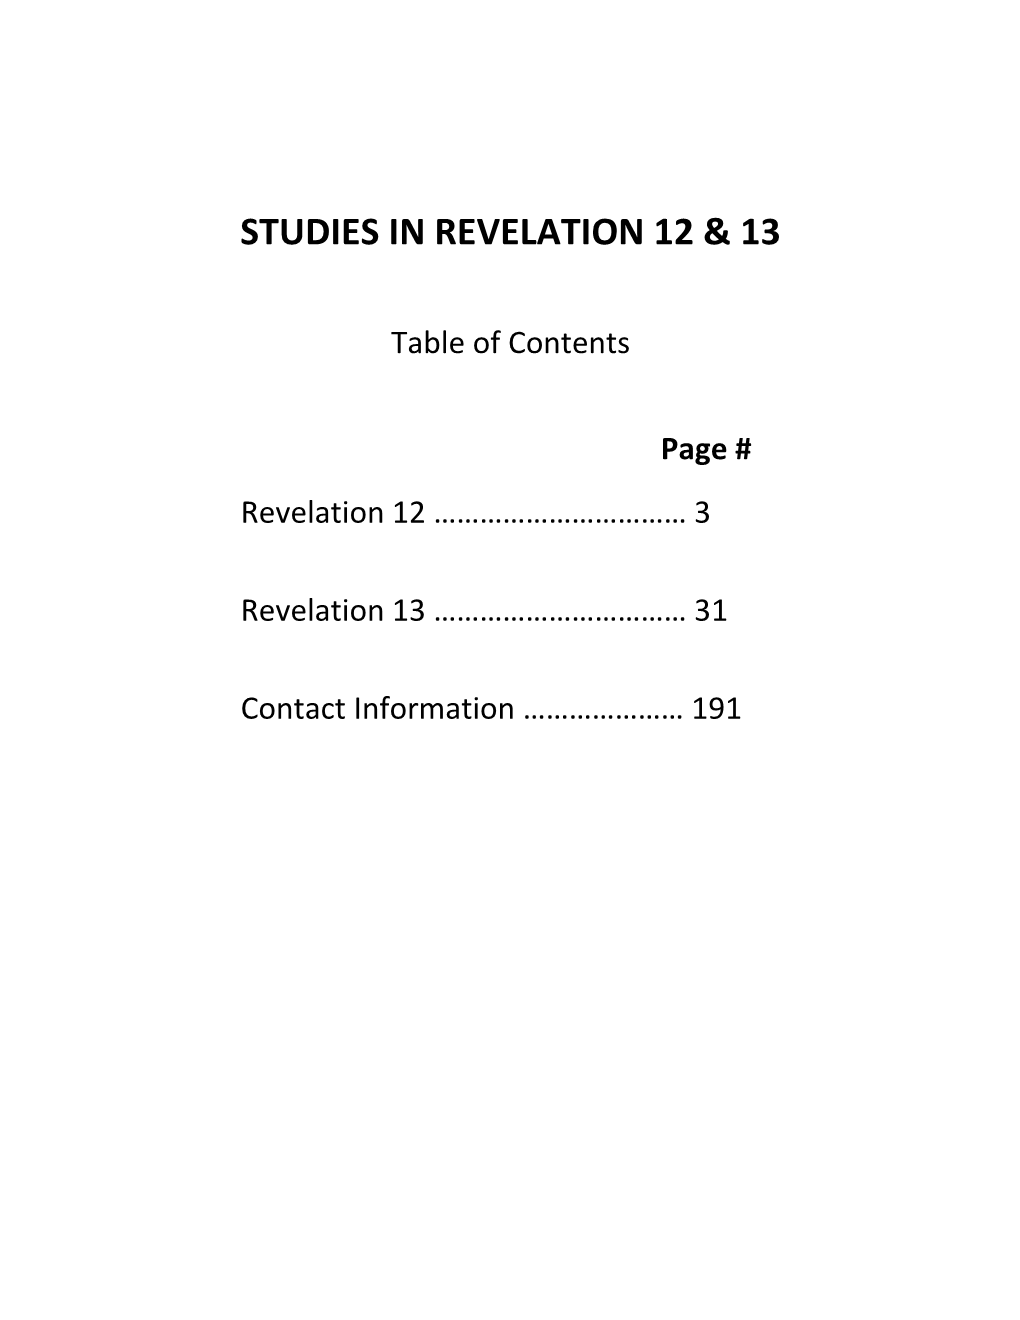 Studies in Revelation 12 & 13